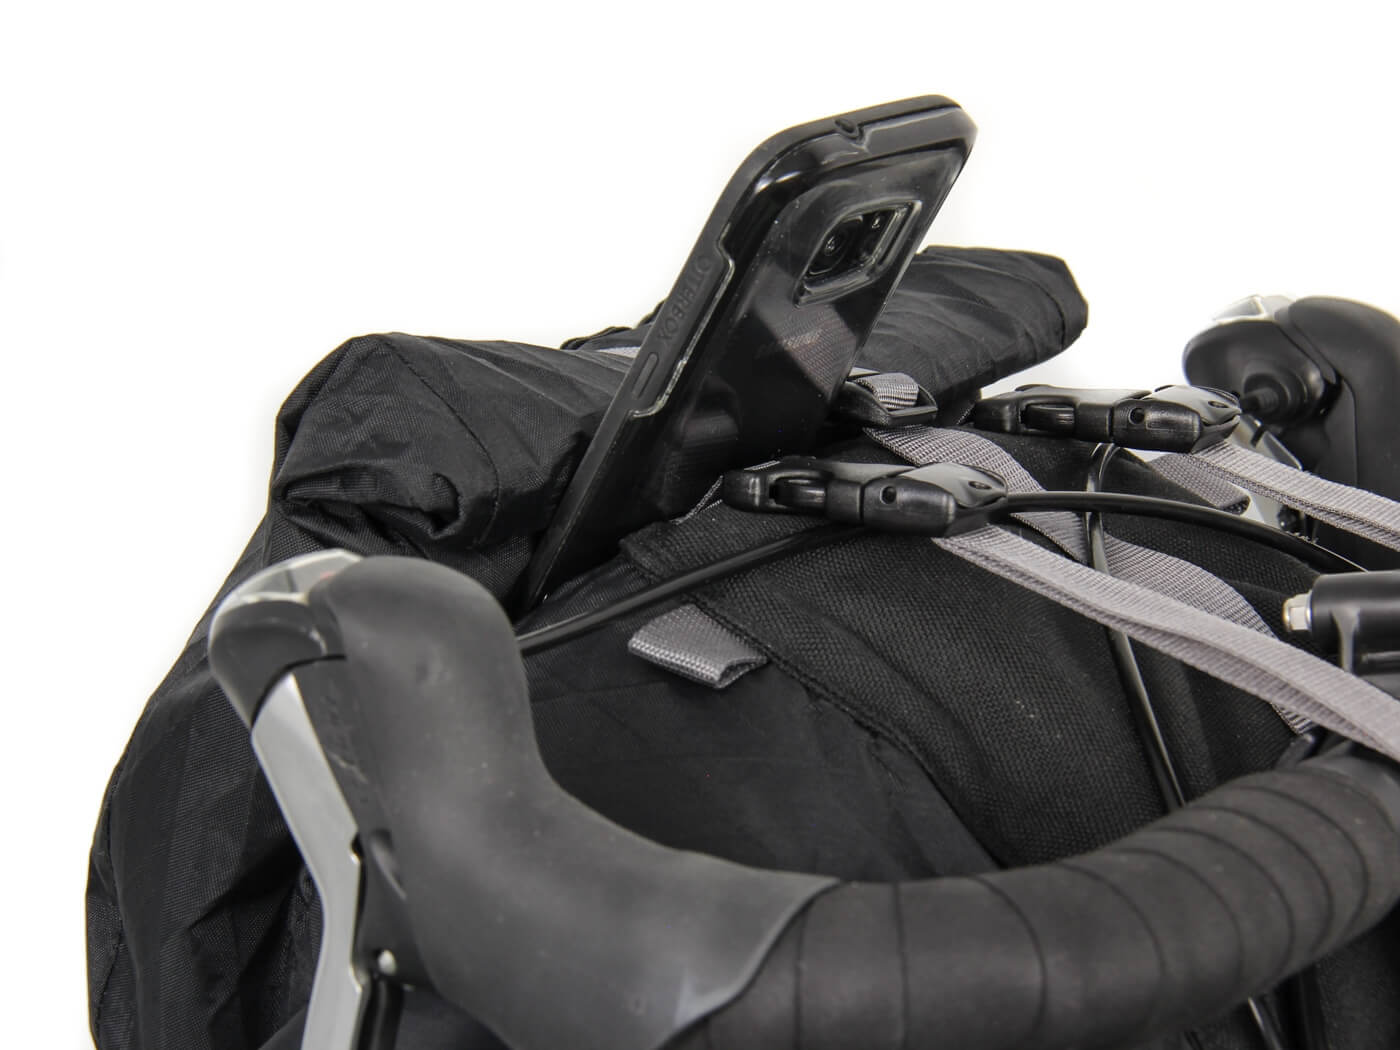 Arkel Bike Bags Rollpacker Front - Bikepacking Bag